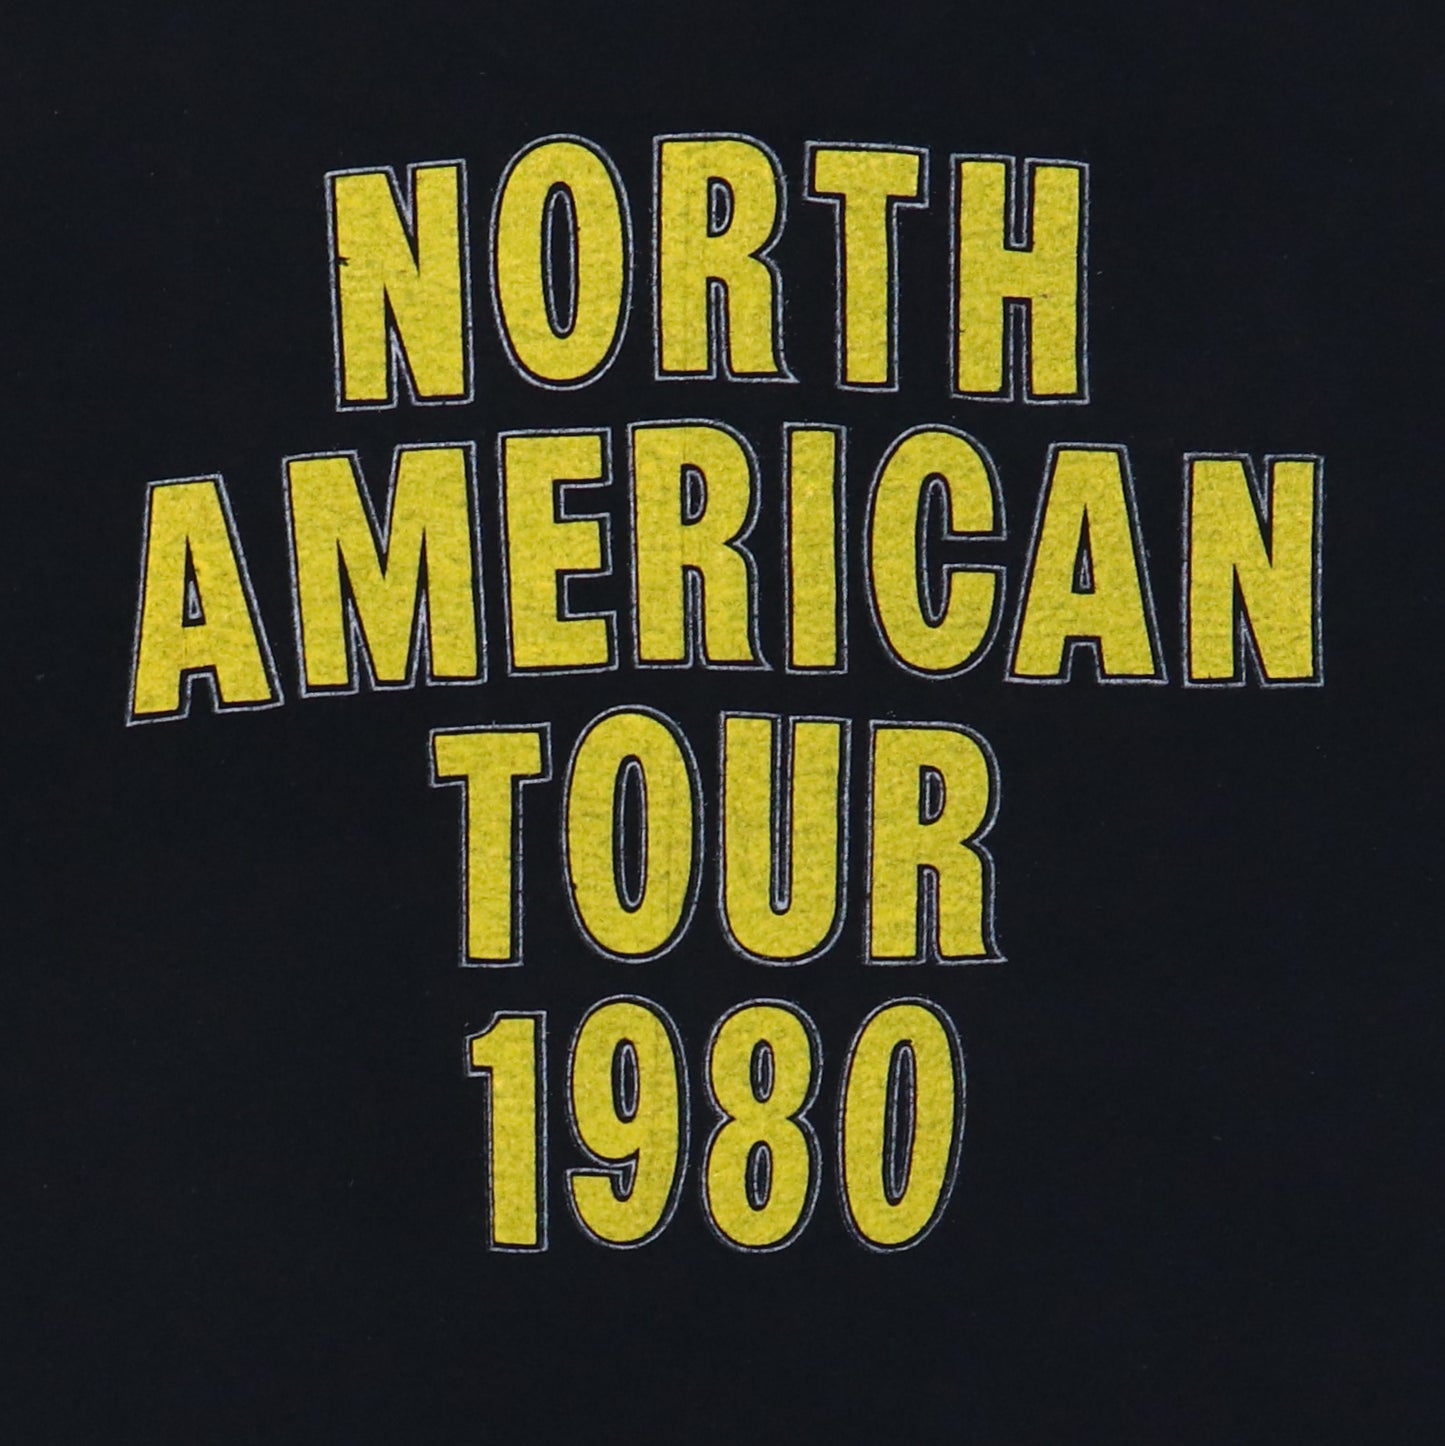 1980 Alice Cooper North American Tour Shirt